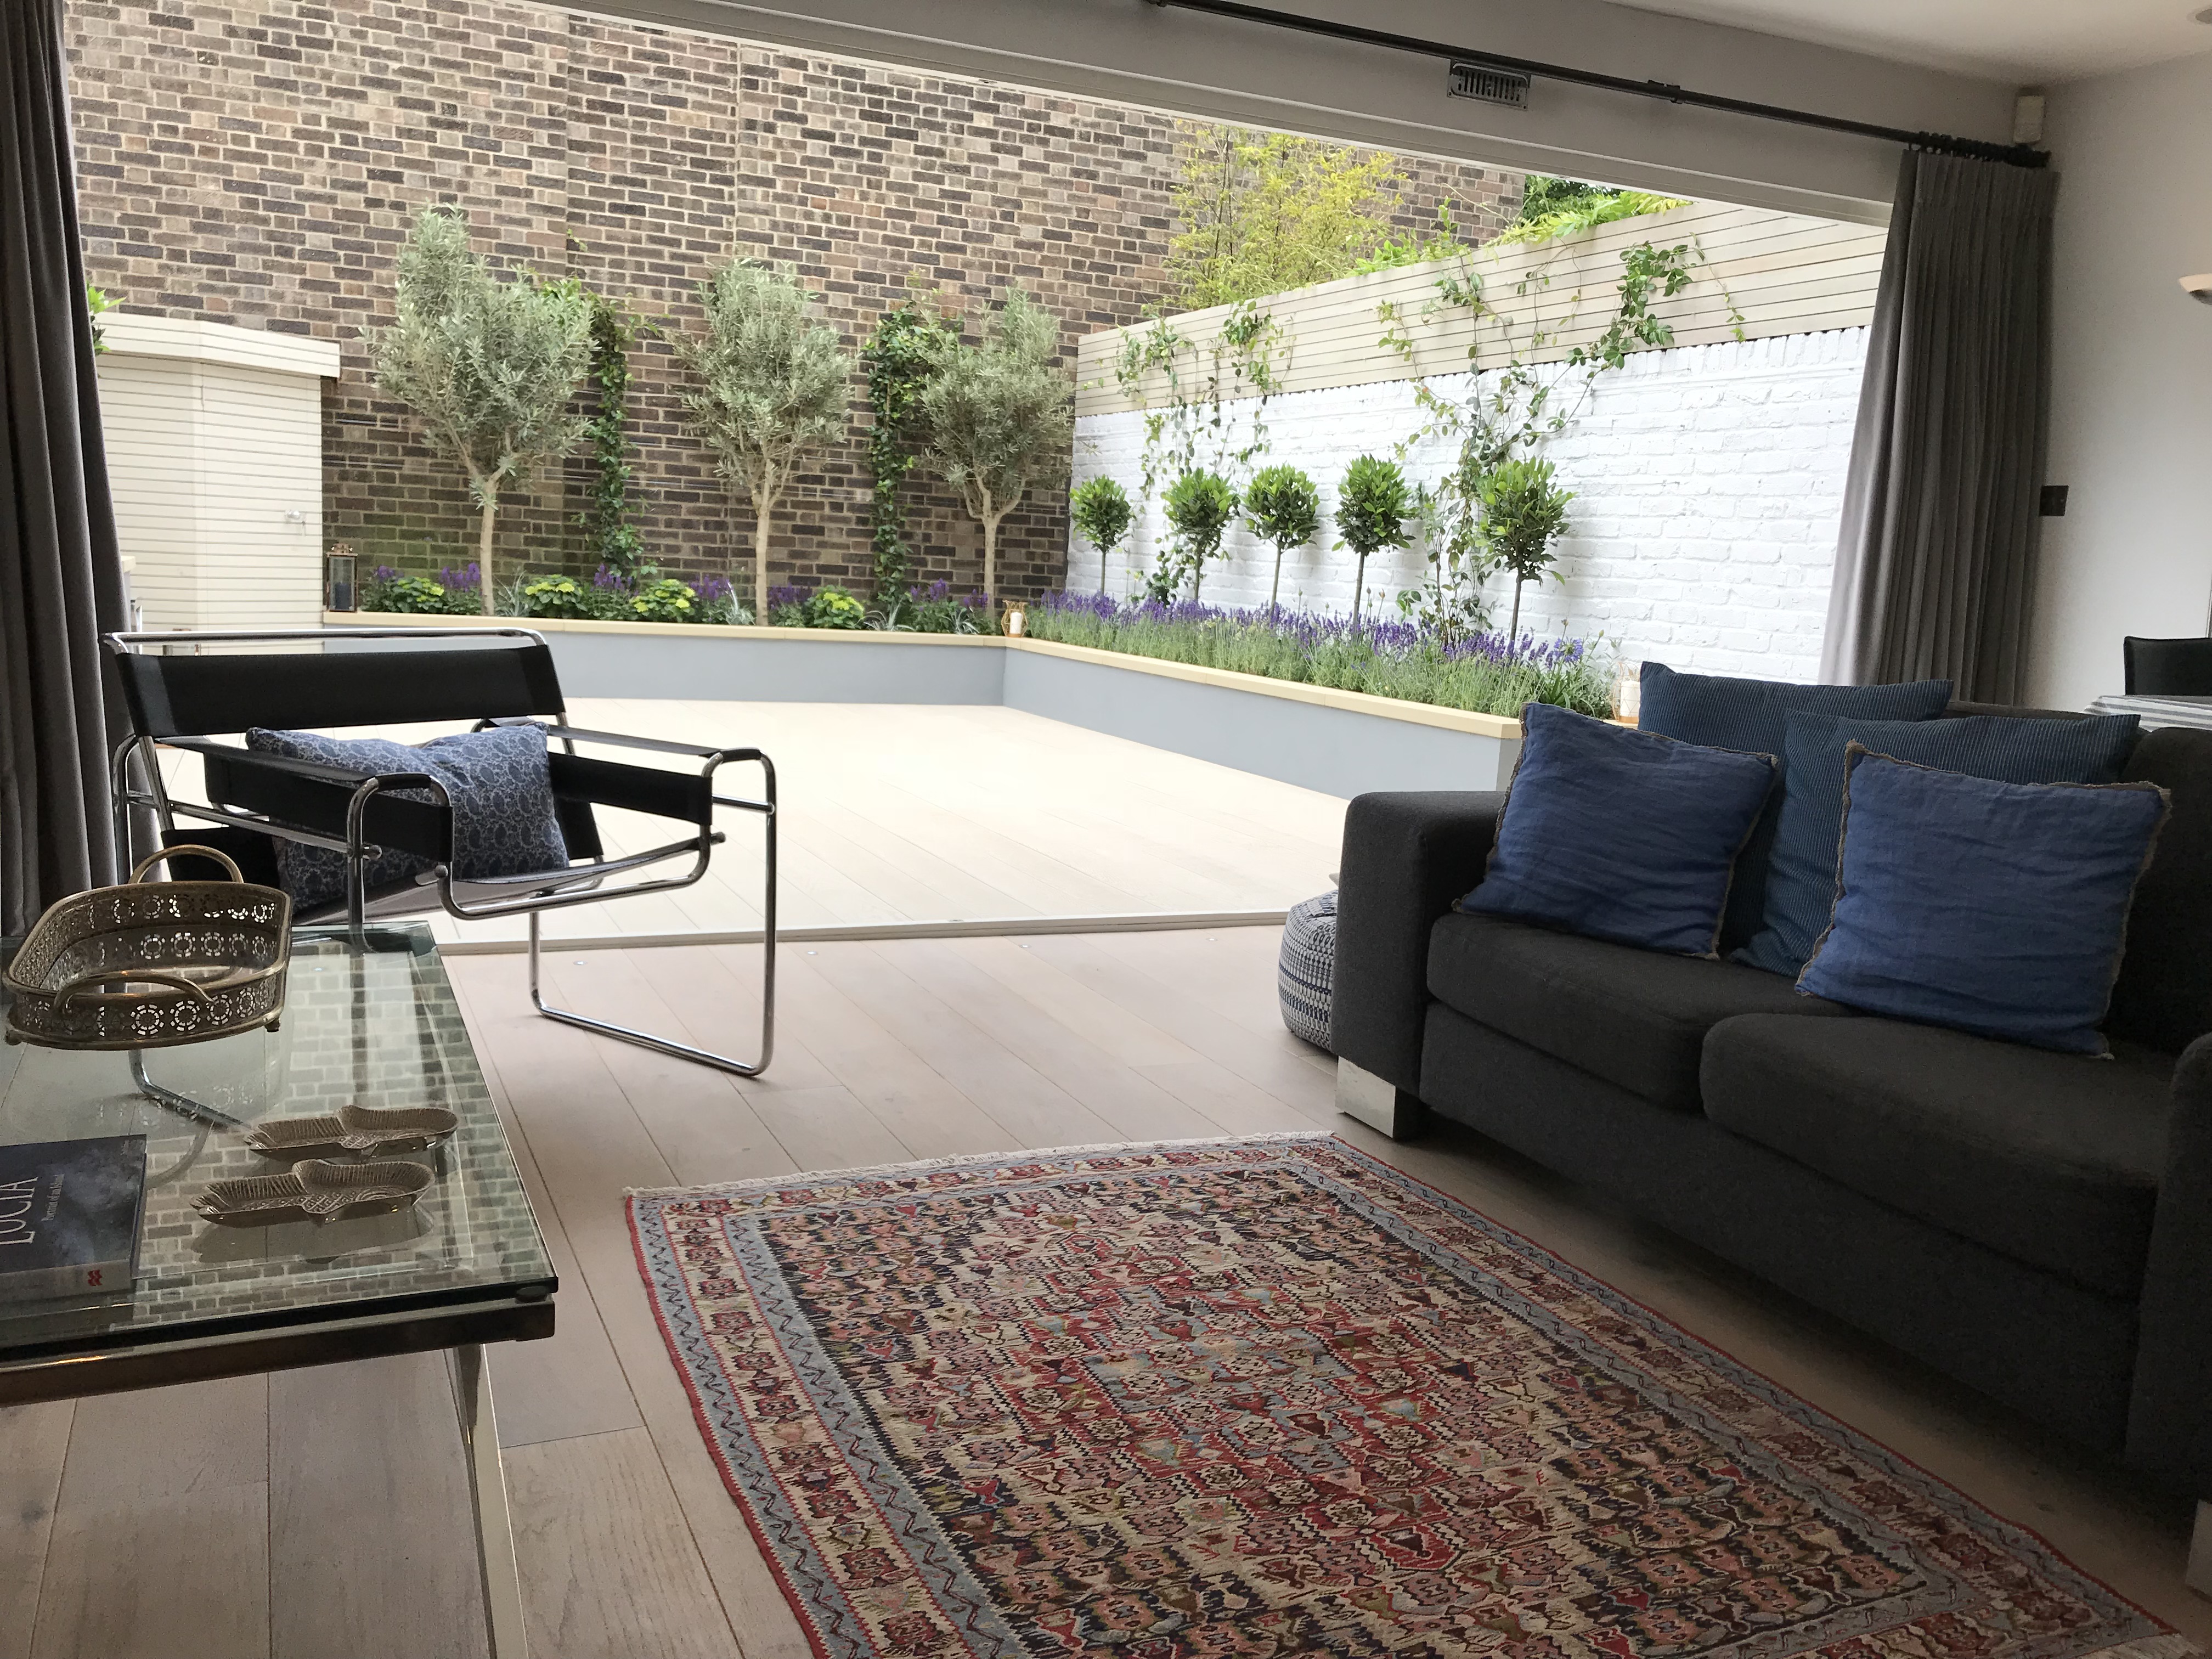 Contemporary modern garden design London decking screen raised bed